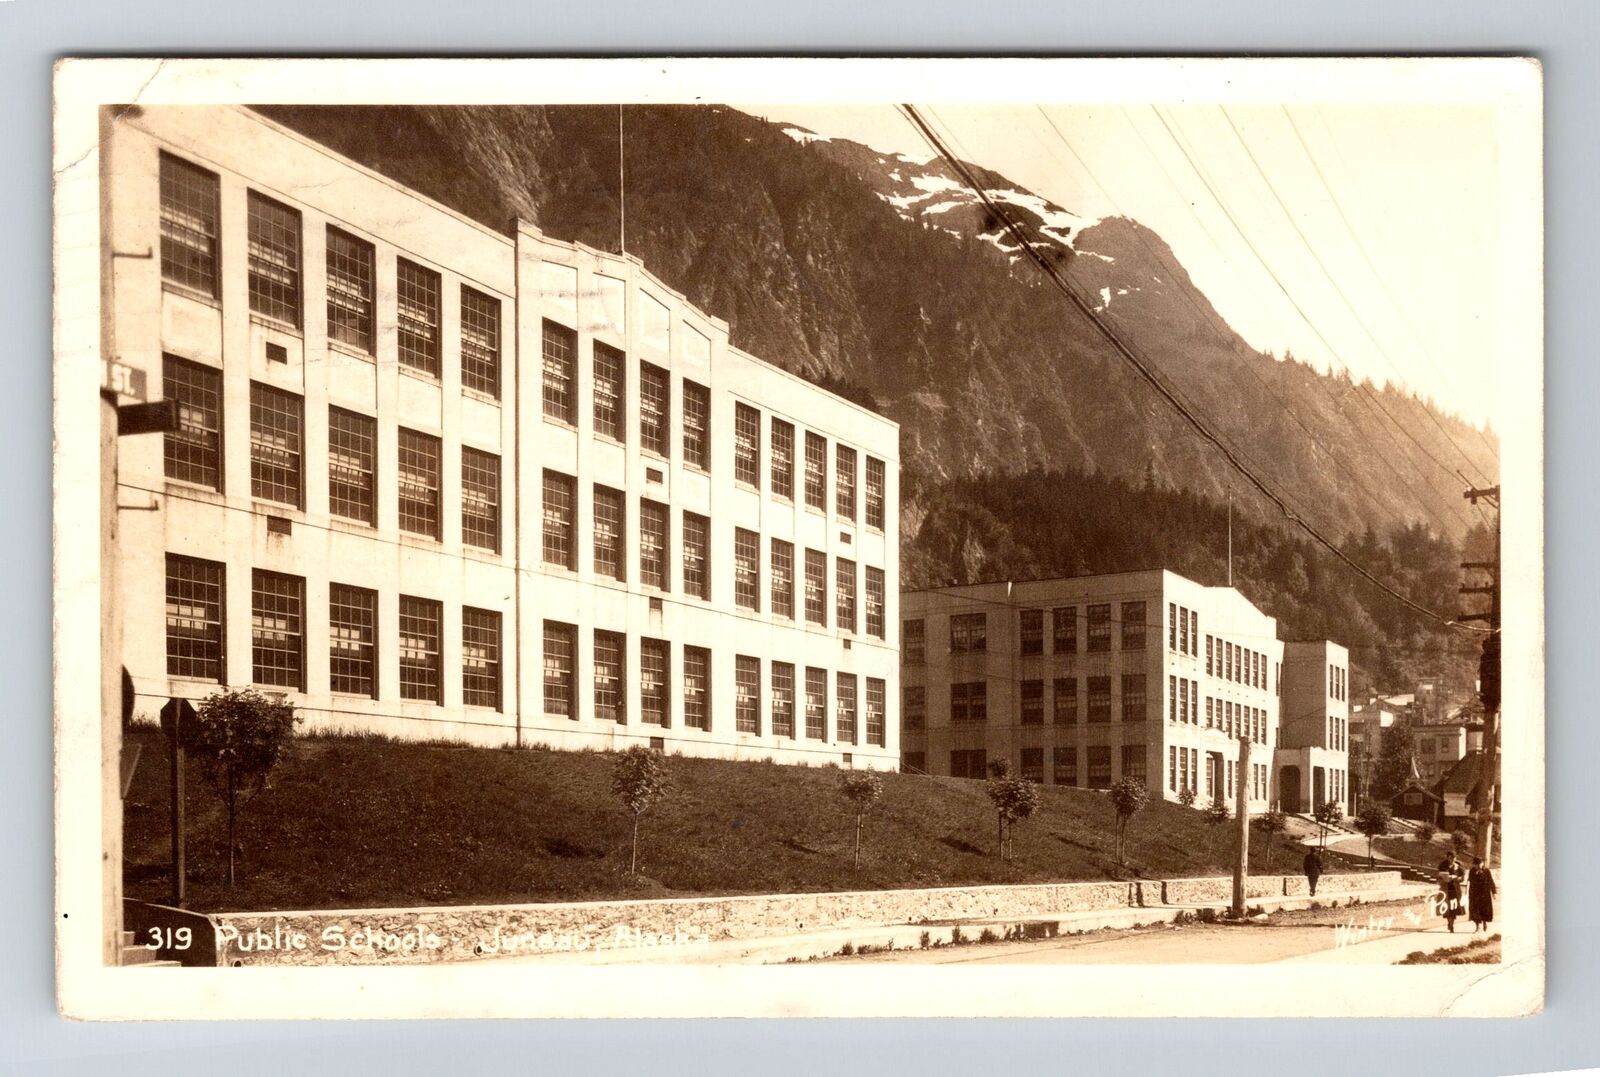 Juneau AK-Alaska RPPC, Public Schools, Real Photo c1943 Vintage Postcard